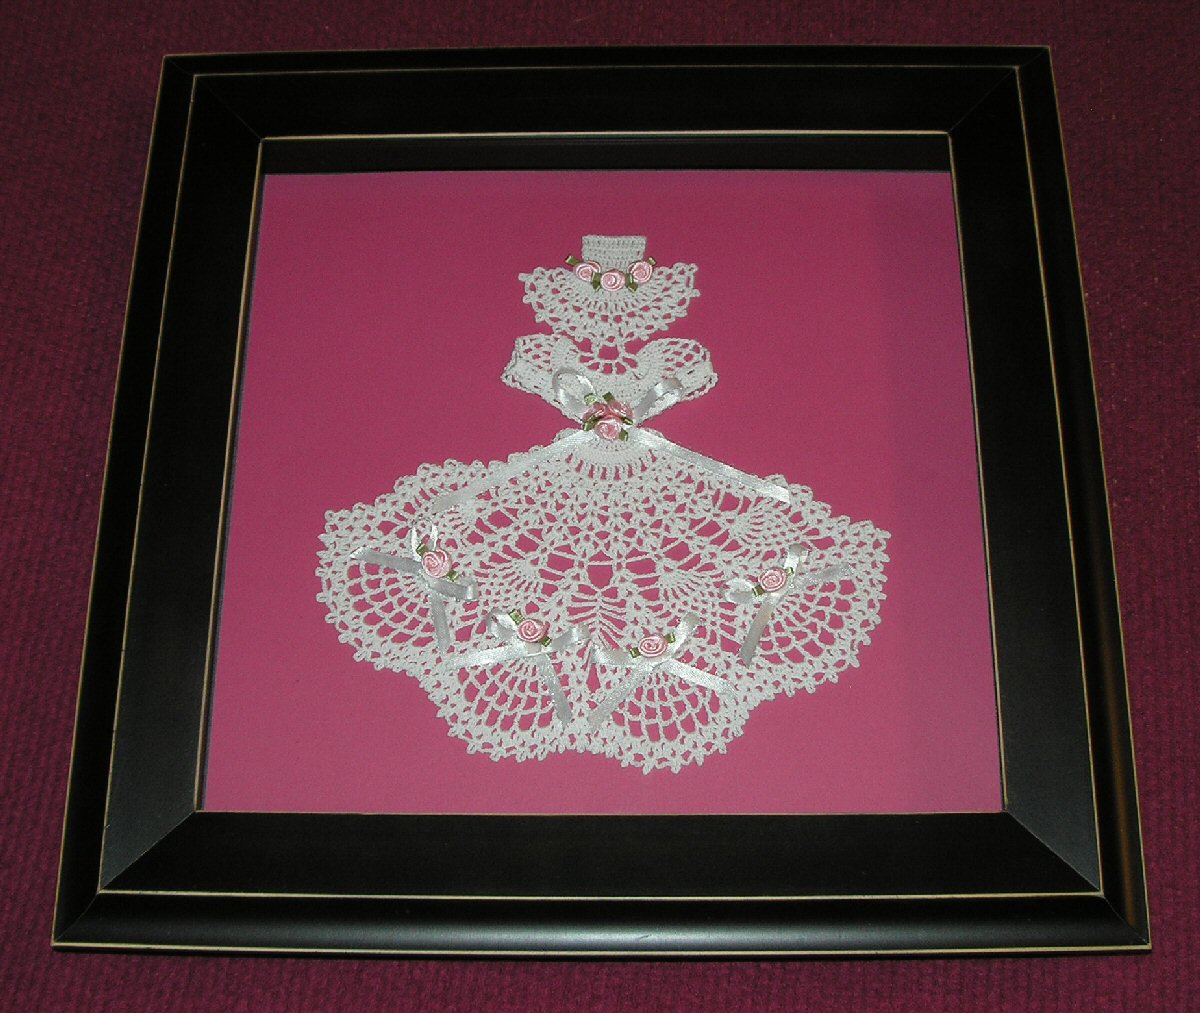 Crinoline Bride framed